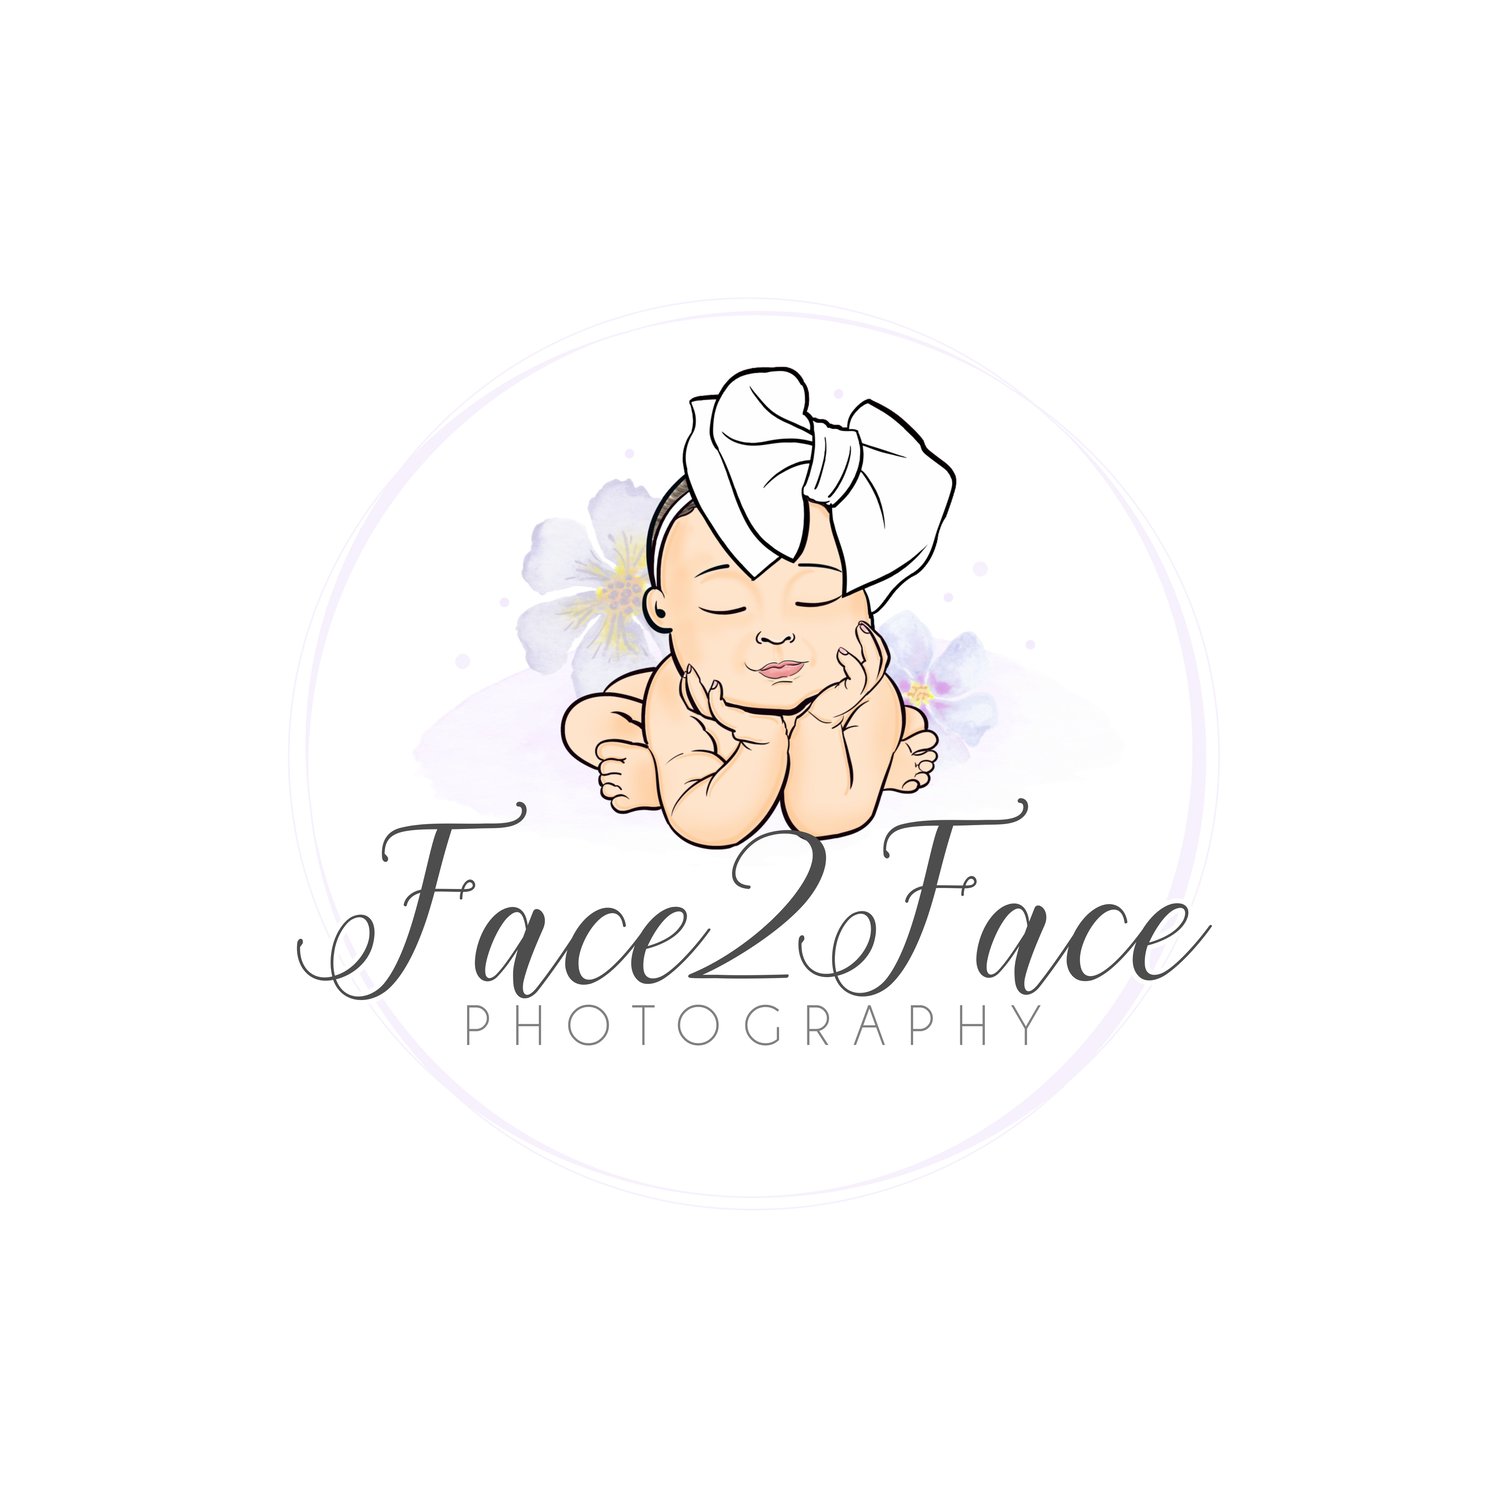 Face2Face Photography